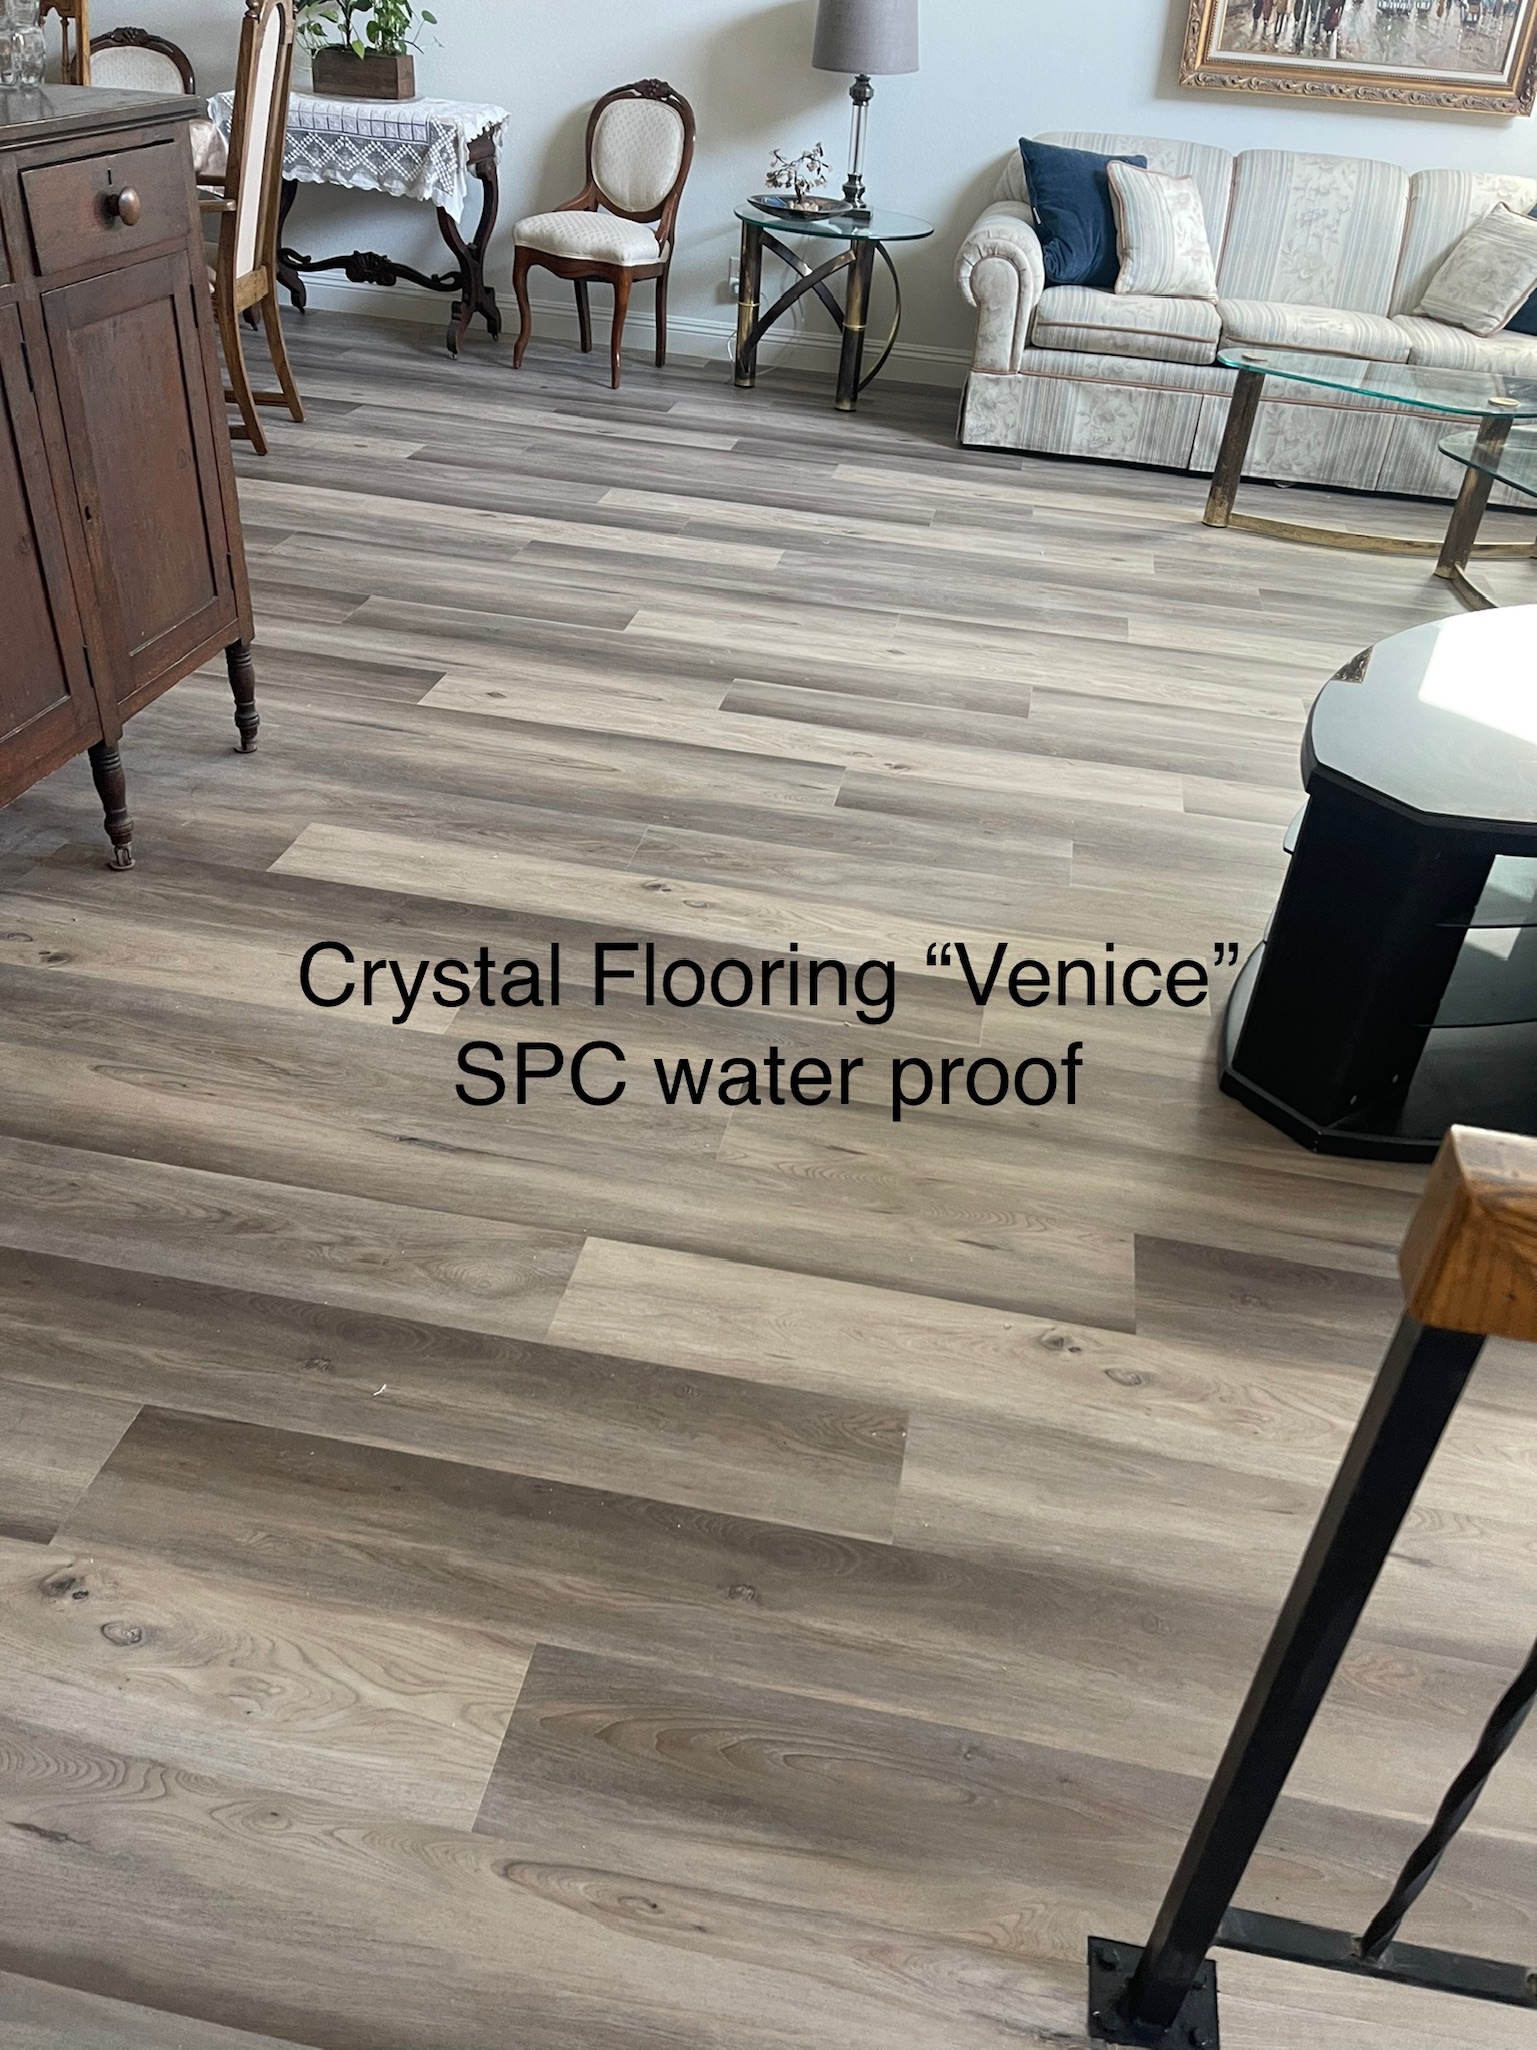 Crystal Flooring "Venice"